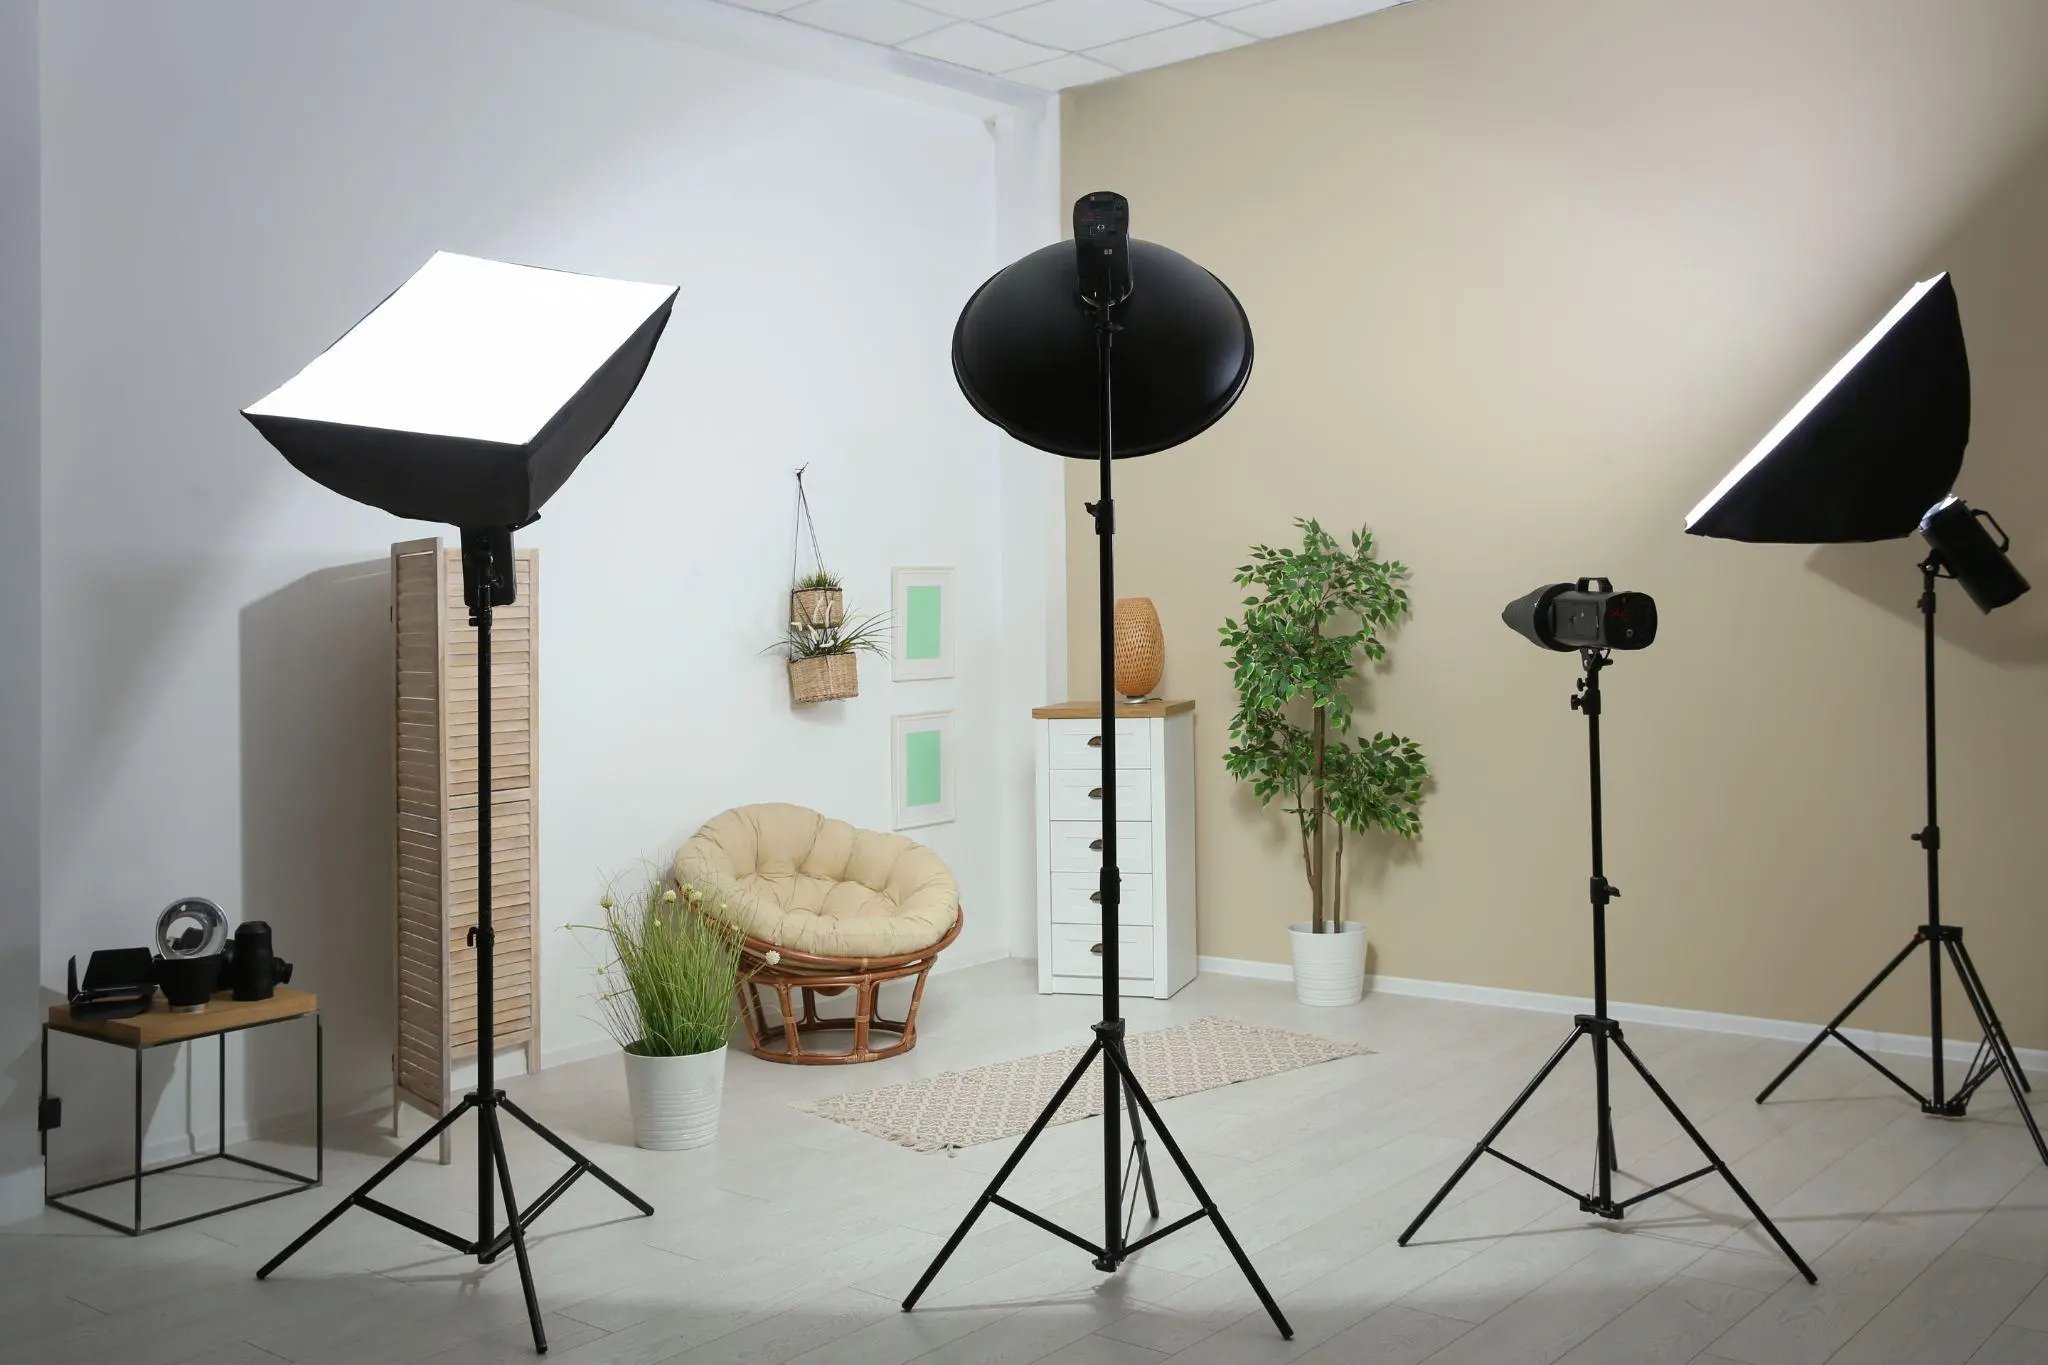 Example of living room interior design and professional equipment in photo studio